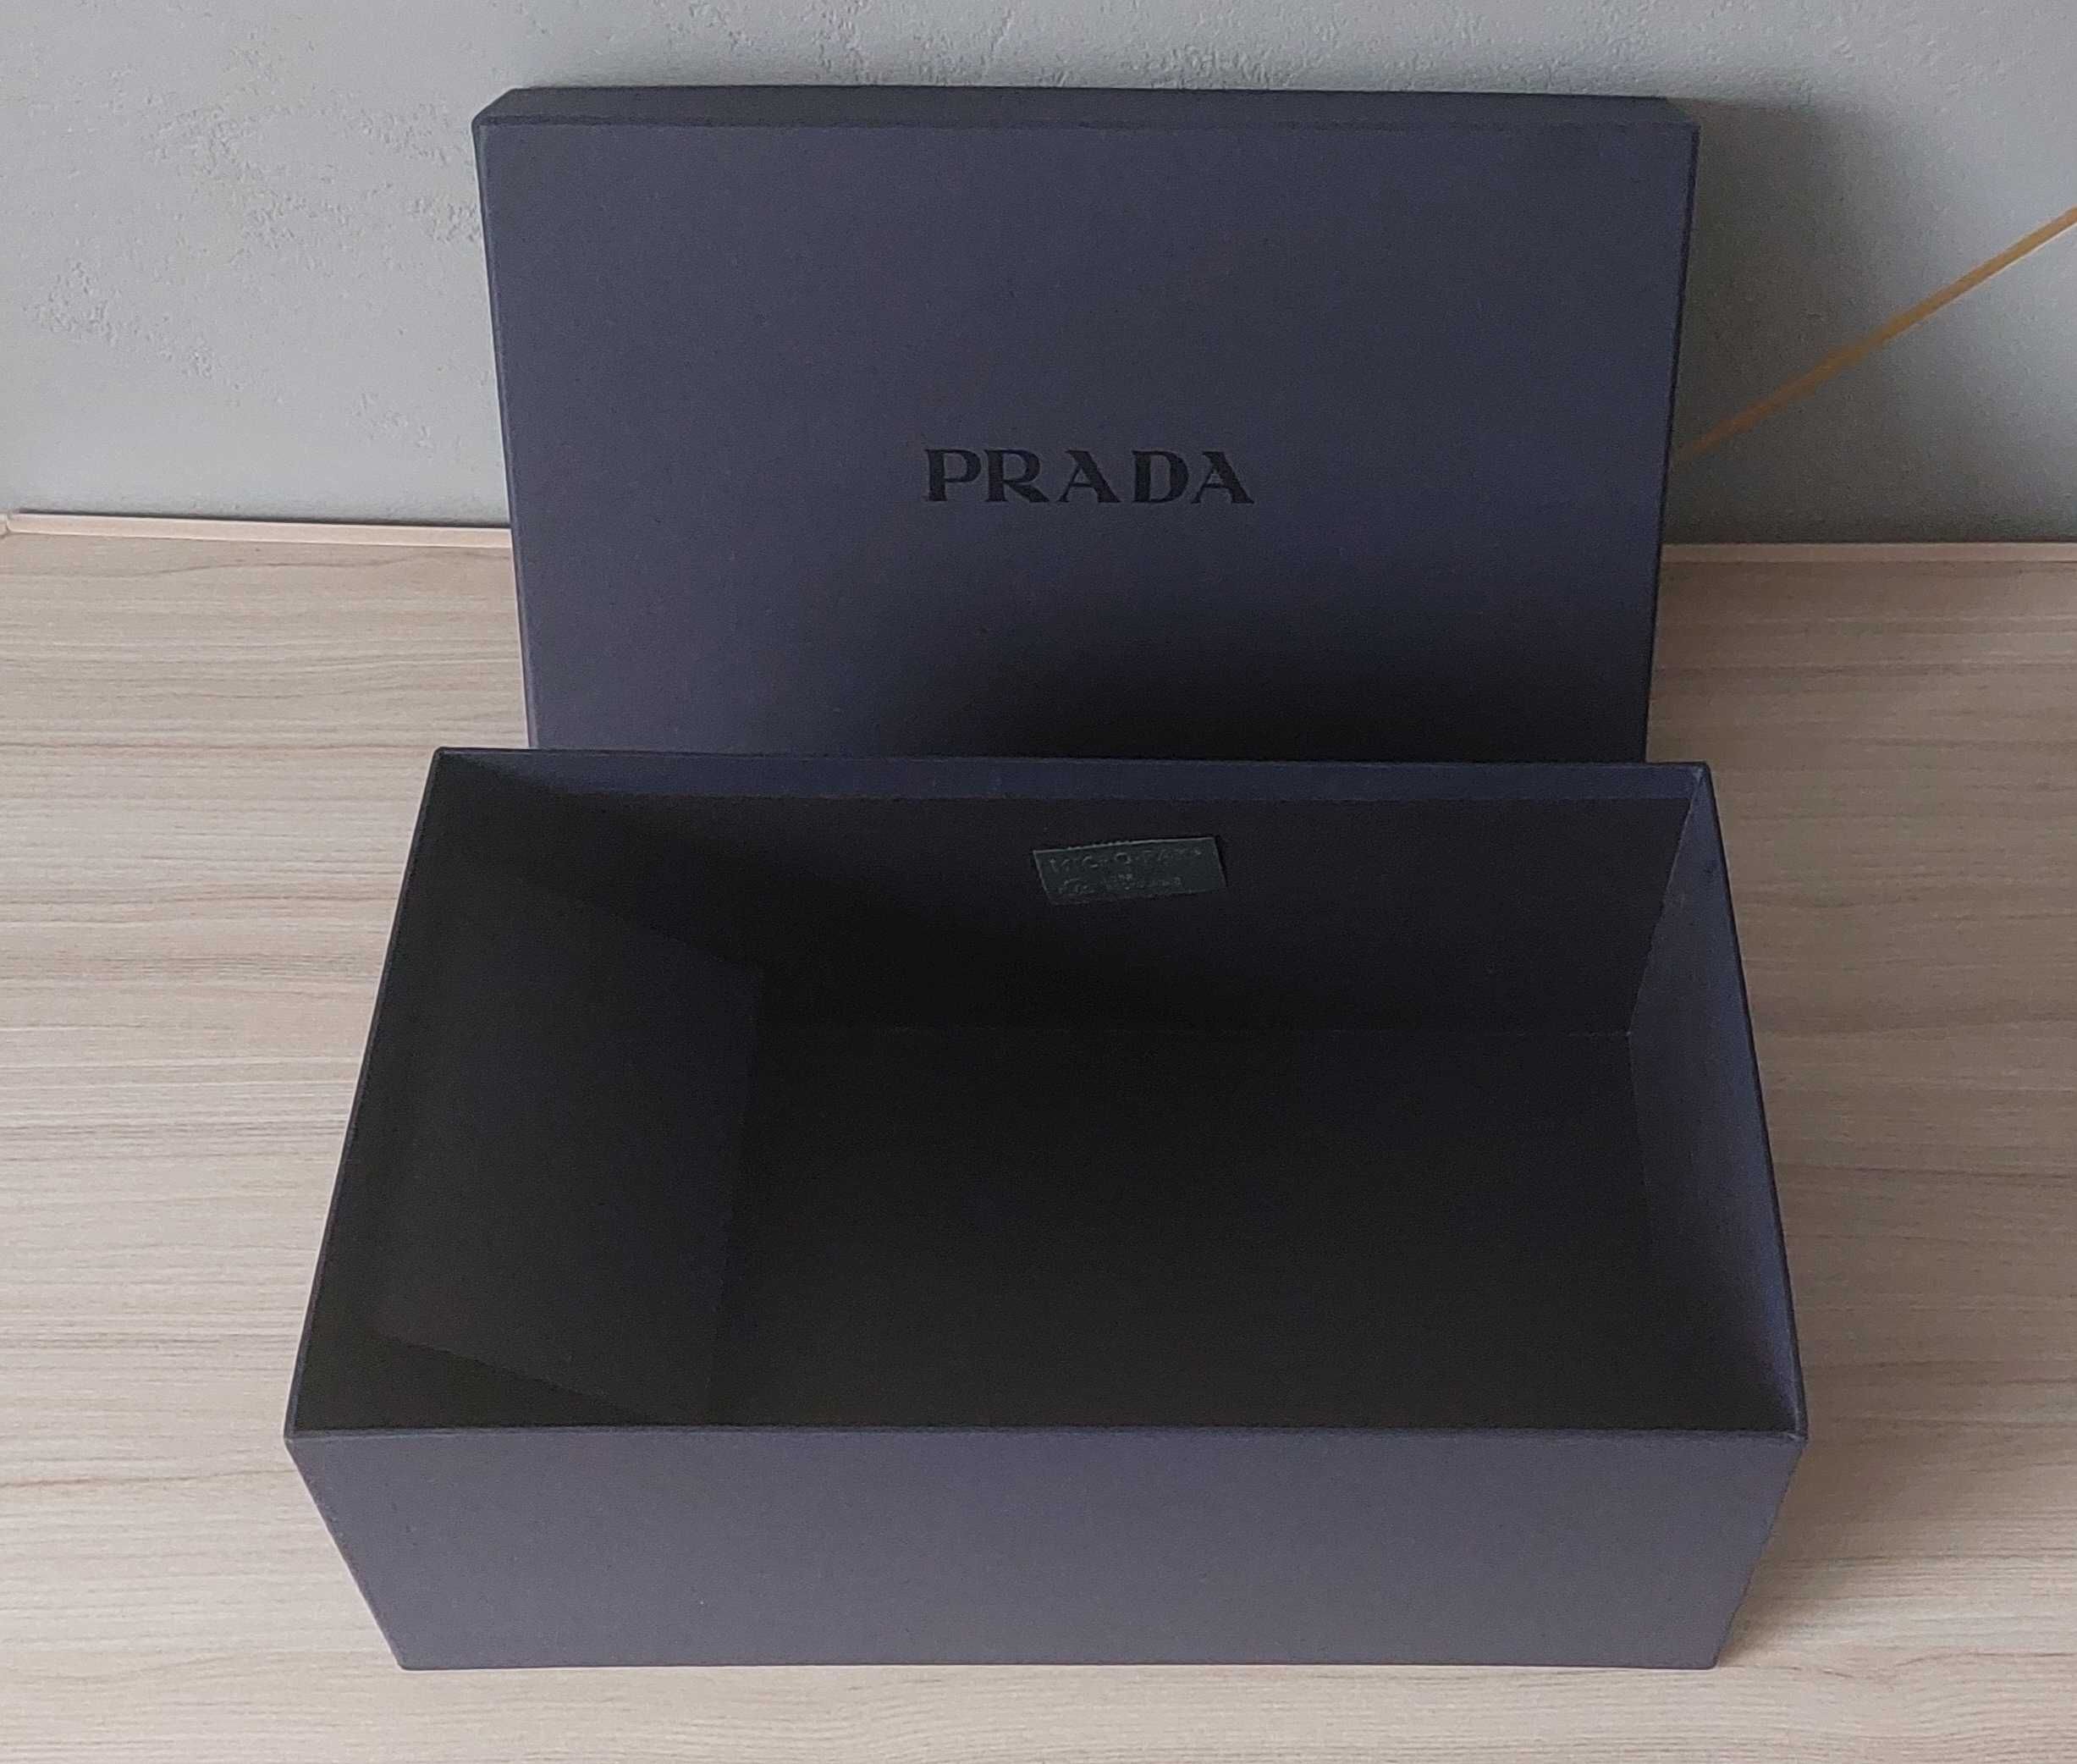 Pudełko PRADA - 34x20x13 cm - oryginalne, idealne na prezent